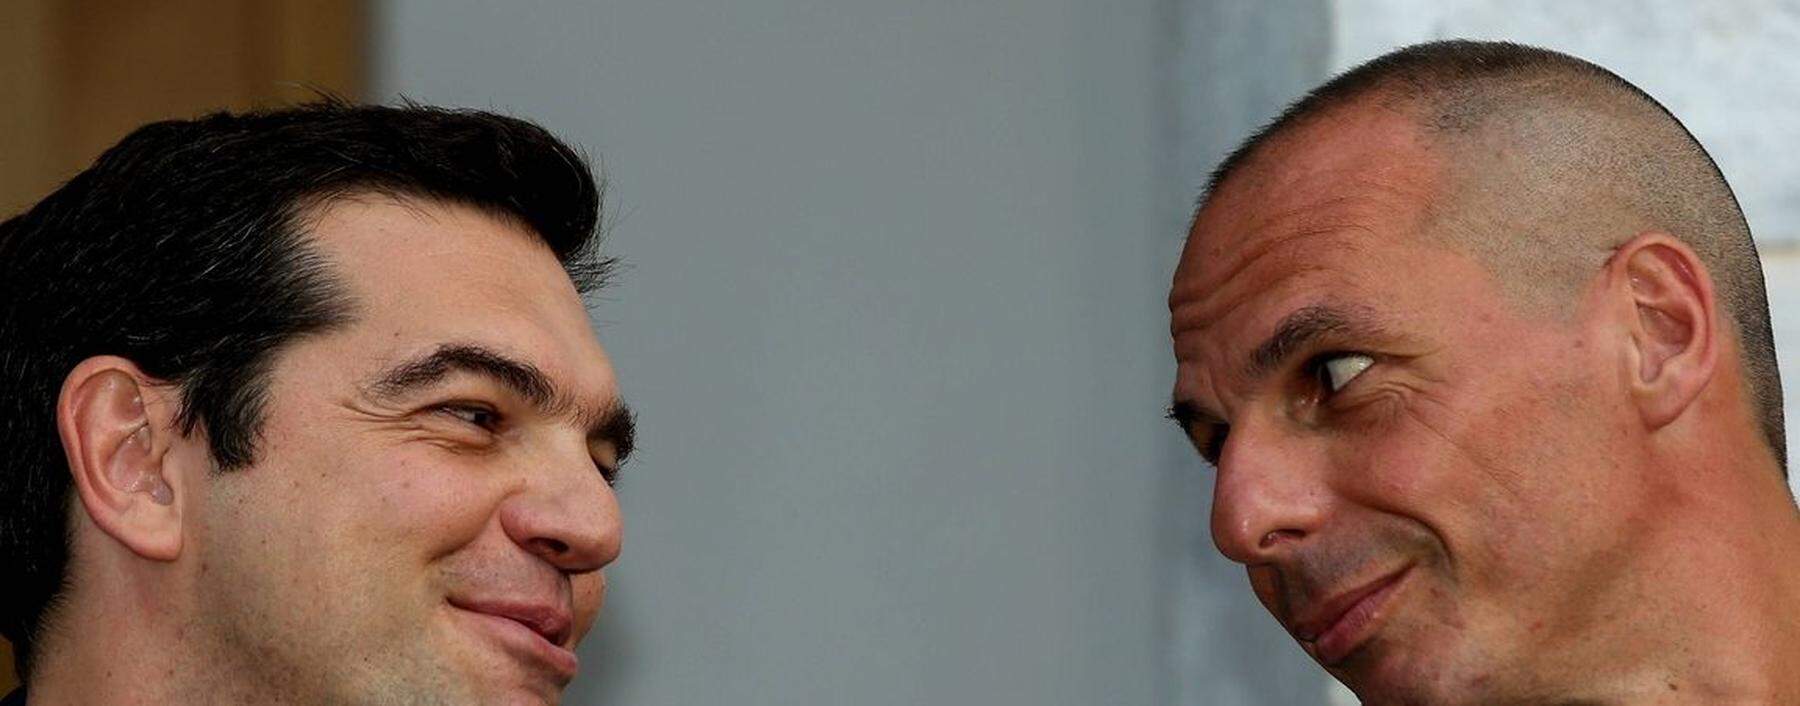 the new Greek Minister of Finance Yanis Varoufakis the new Greek Minister of Finance Yanis Varoufaki